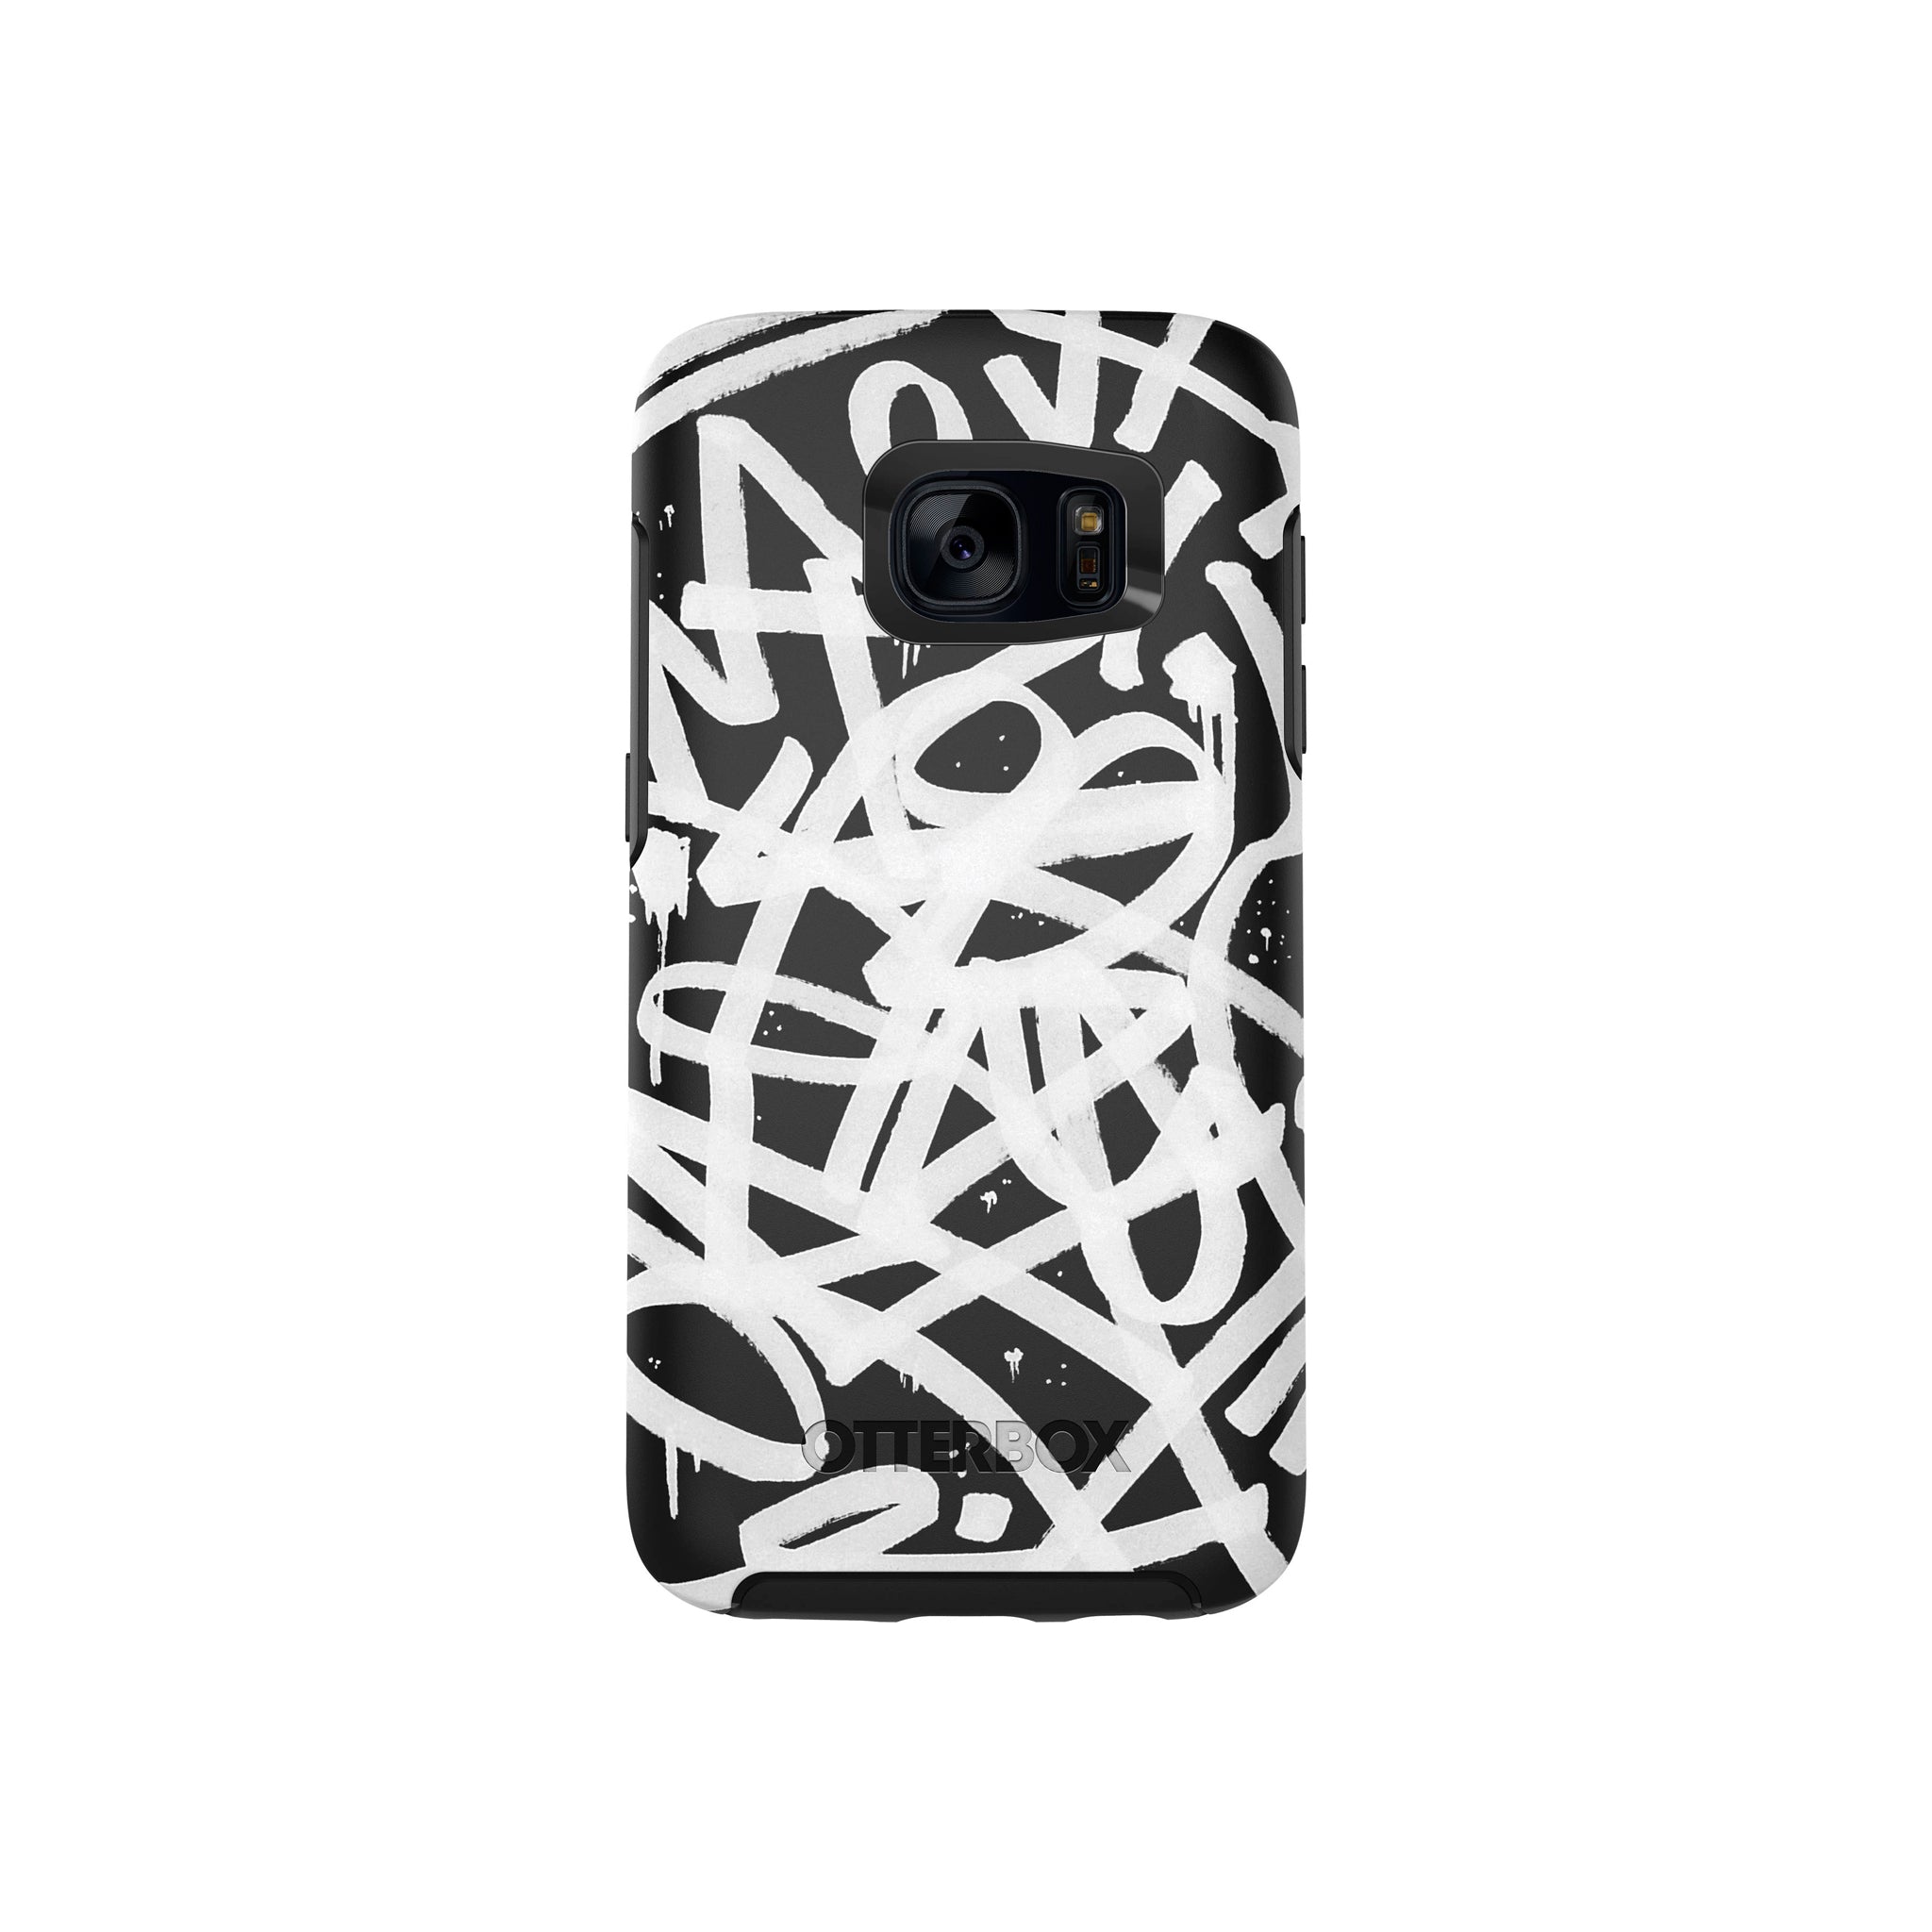 OtterBox - Symmetry Series for Galaxy S7 - Graffiti